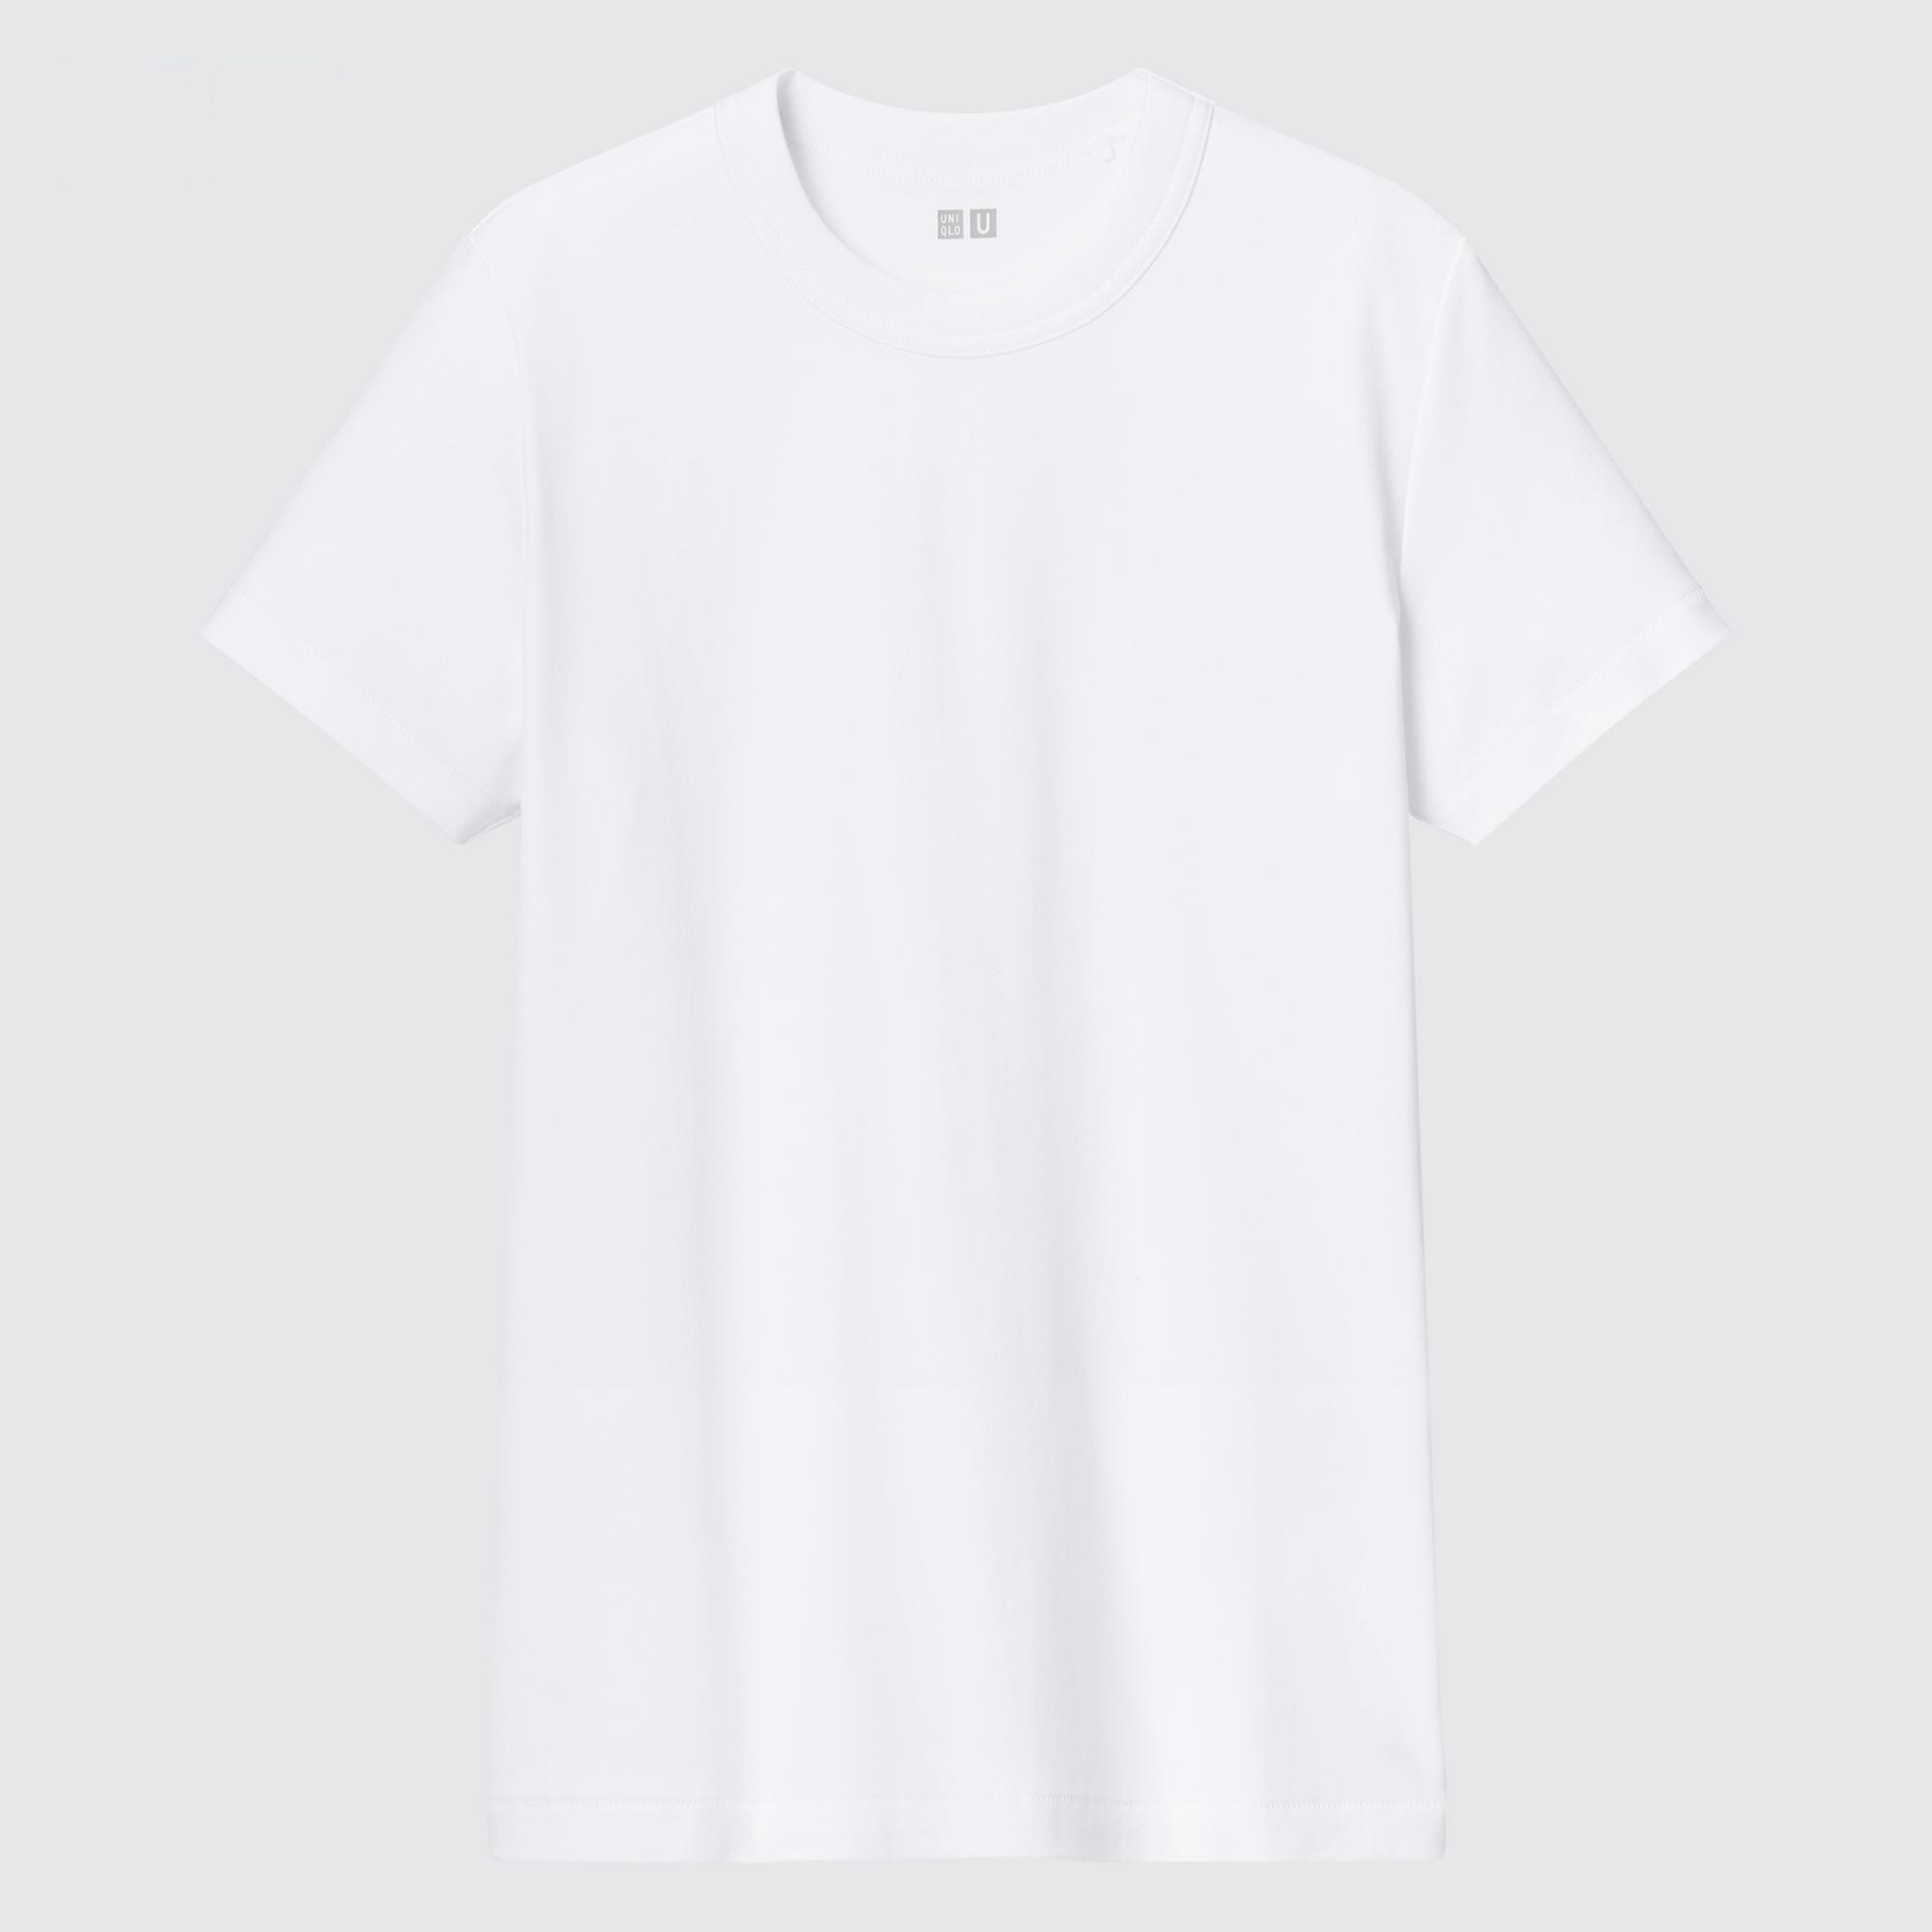 Camiseta blanca de Uniqlo (14,95 euros).